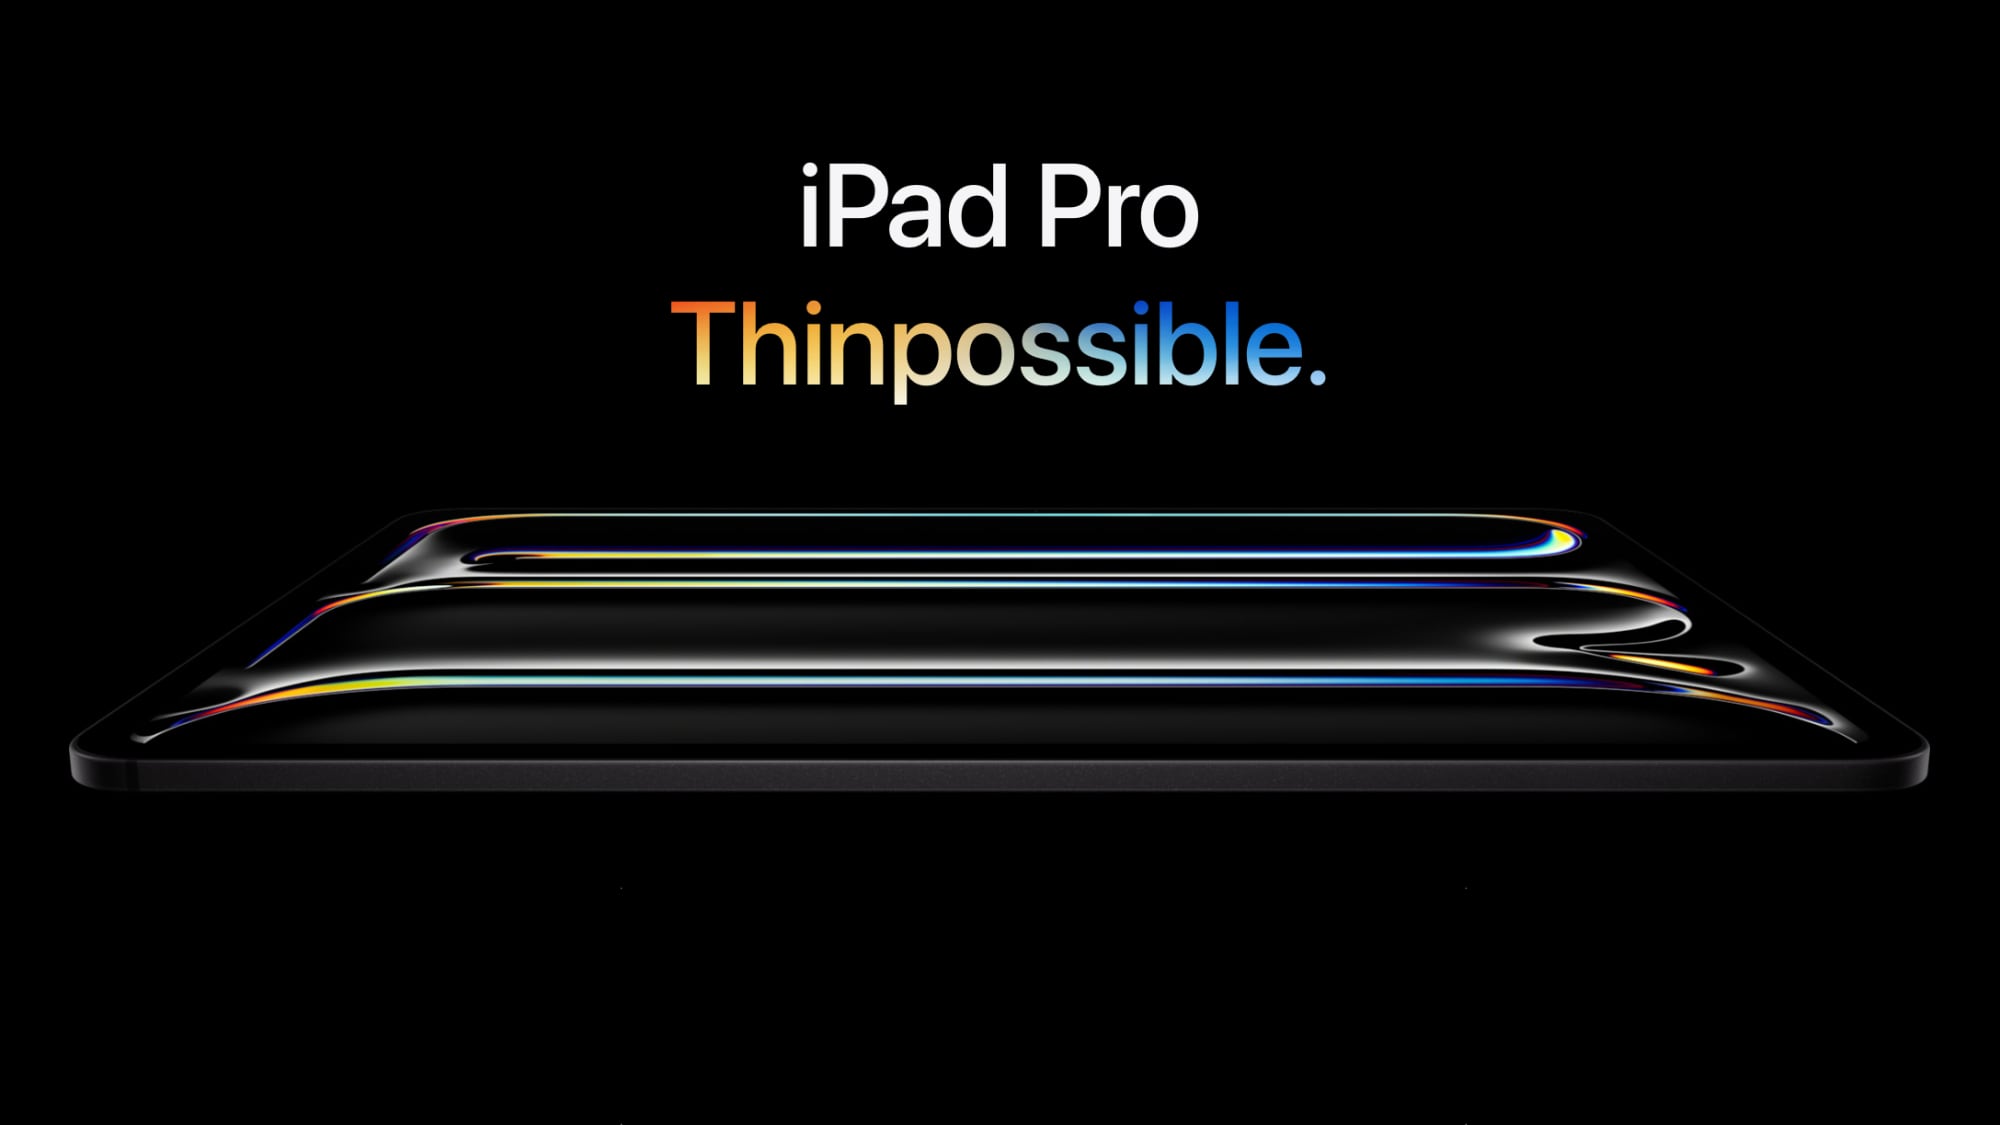 Apple's New iPad Pro Models Weigh Less Than iPad Air Models